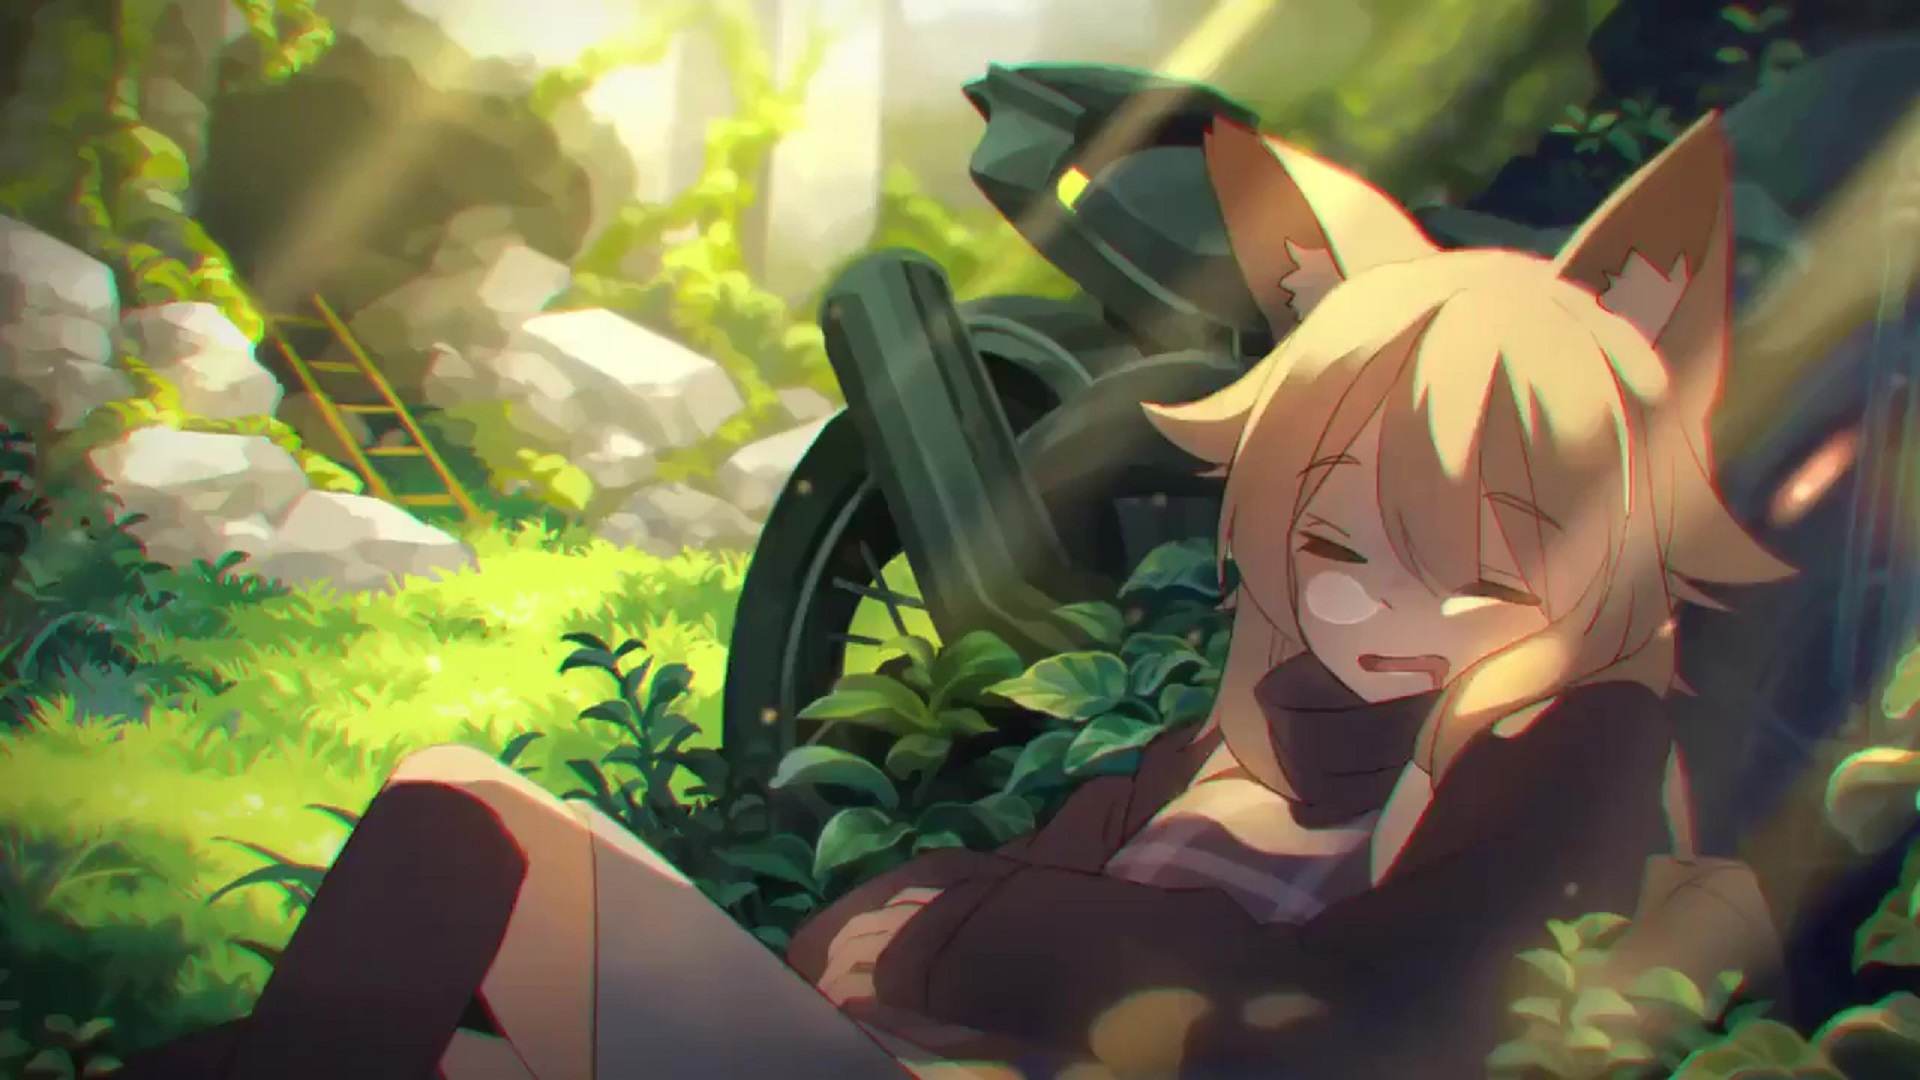 Cute Anime FoxGirl by VariousArtwork on DeviantArt